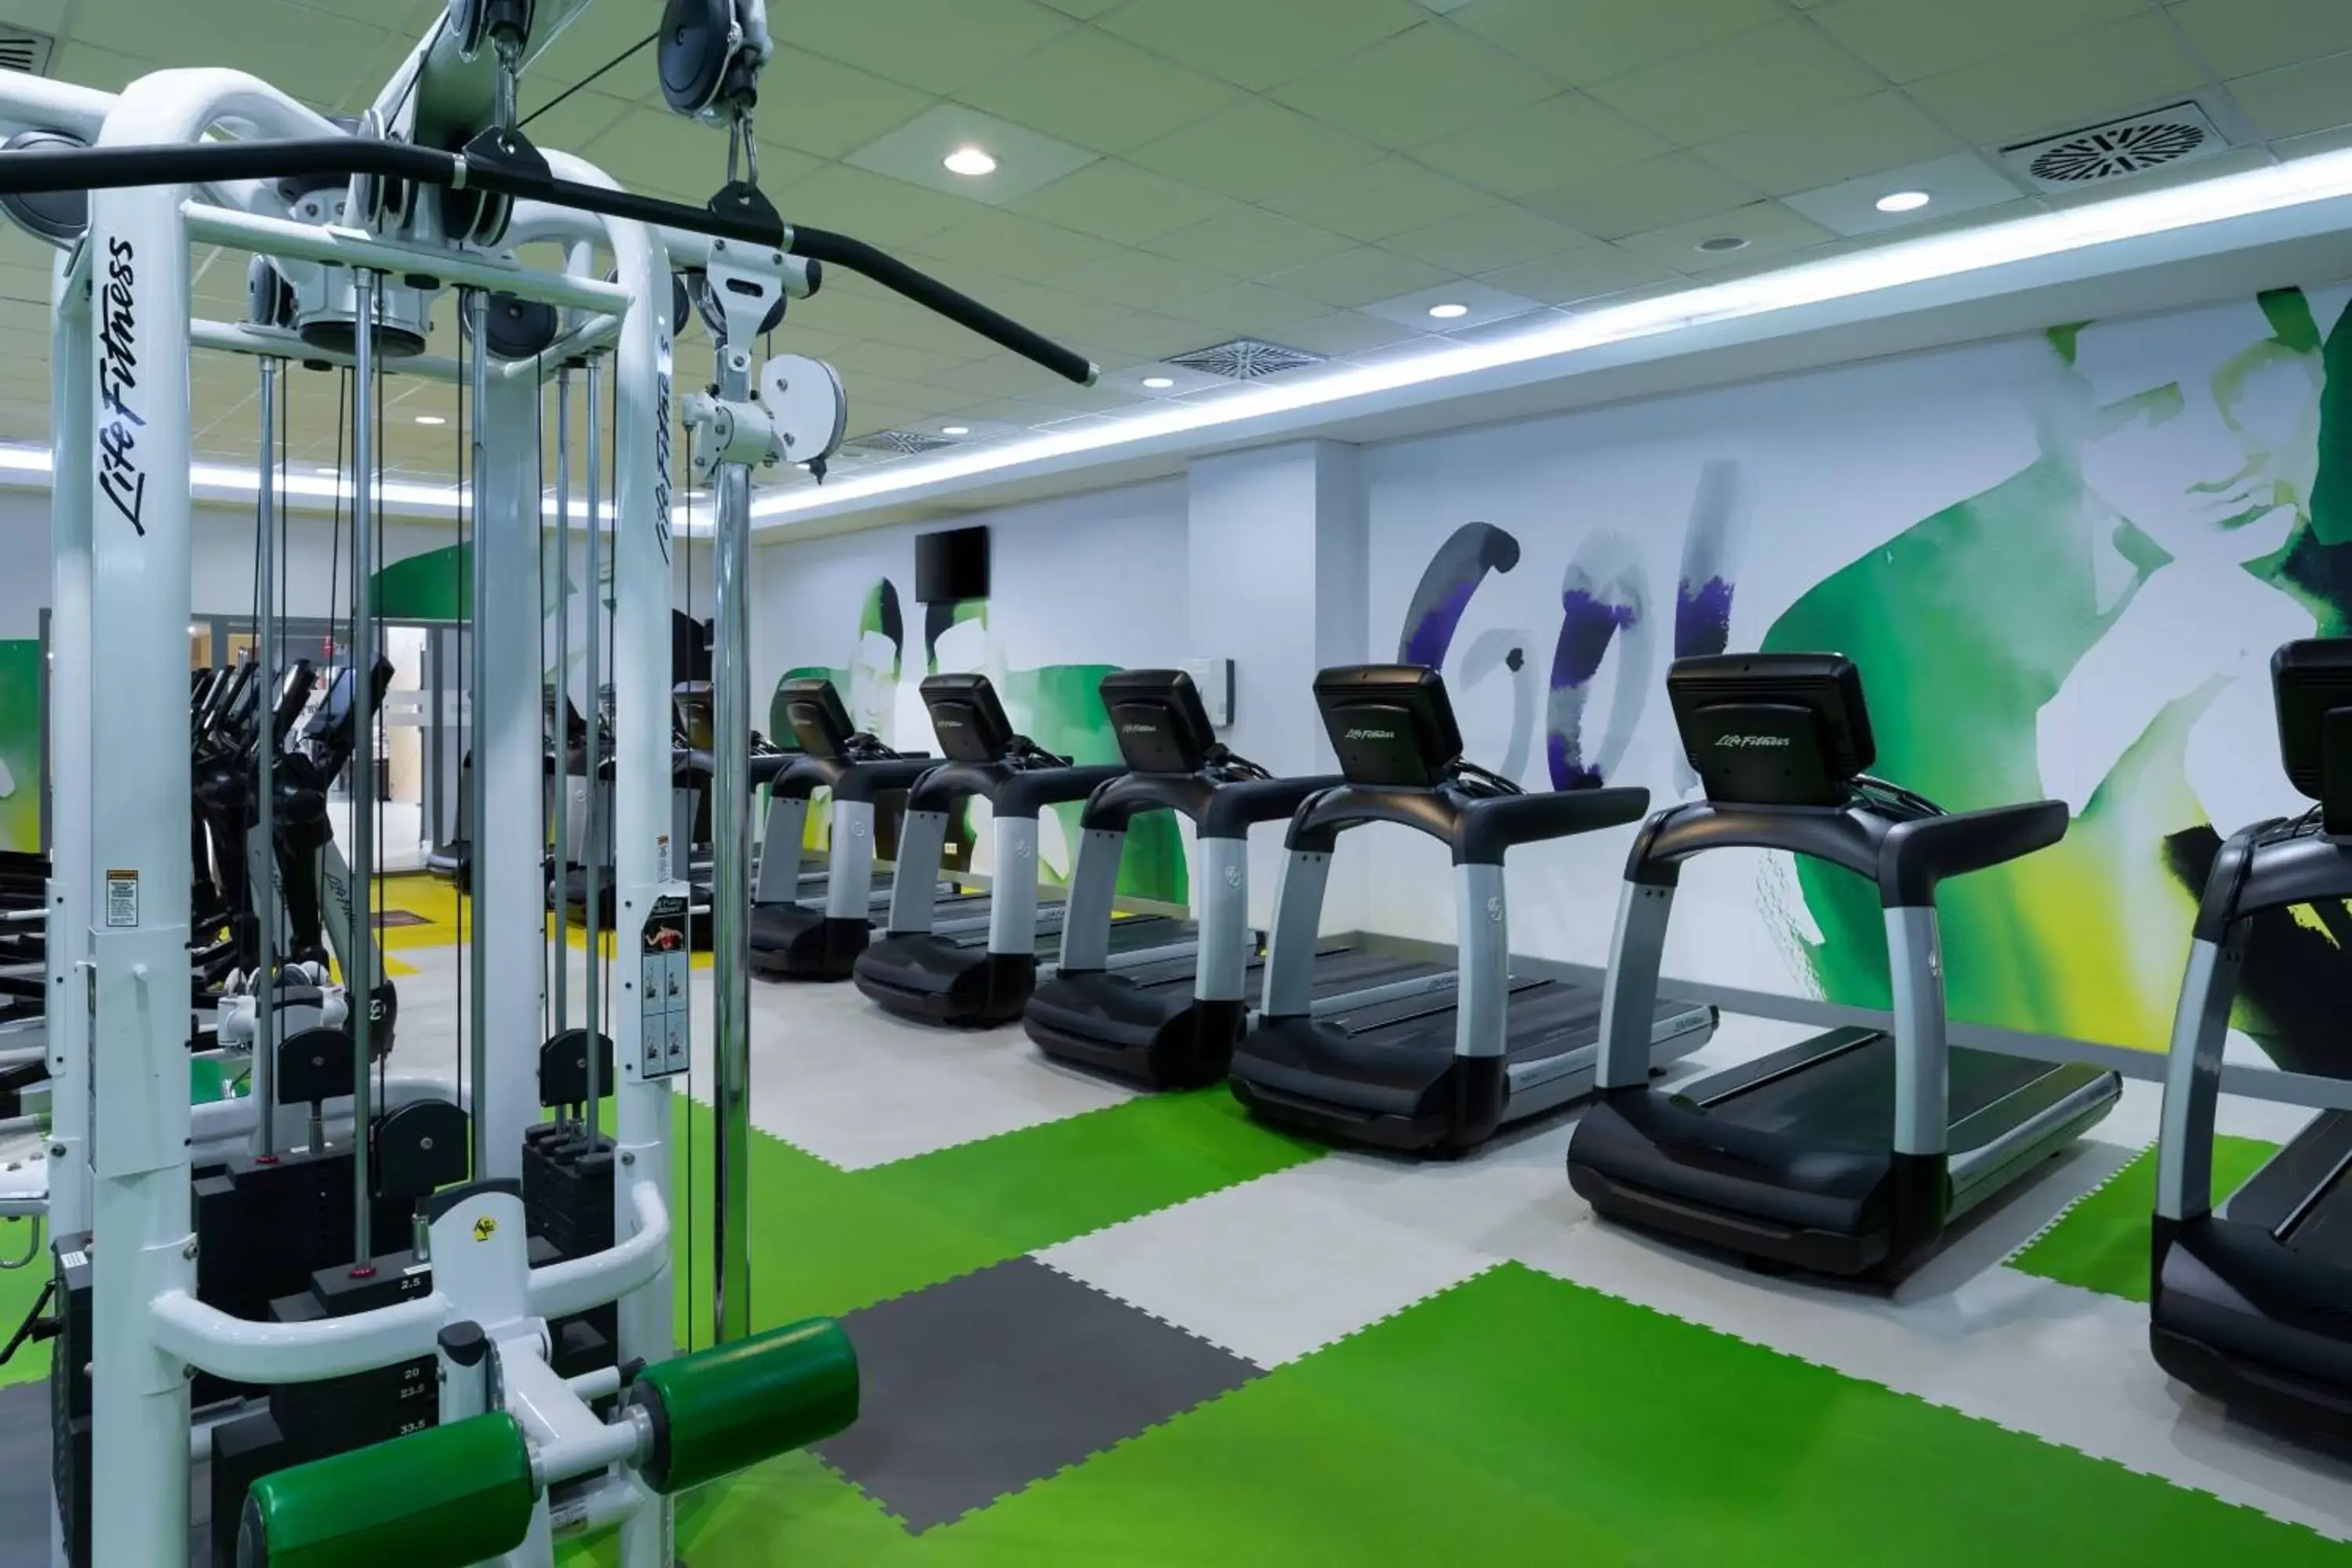 Fitness centre/facilities, Fitness Center/Facilities in JW Marriott Bucharest Grand Hotel